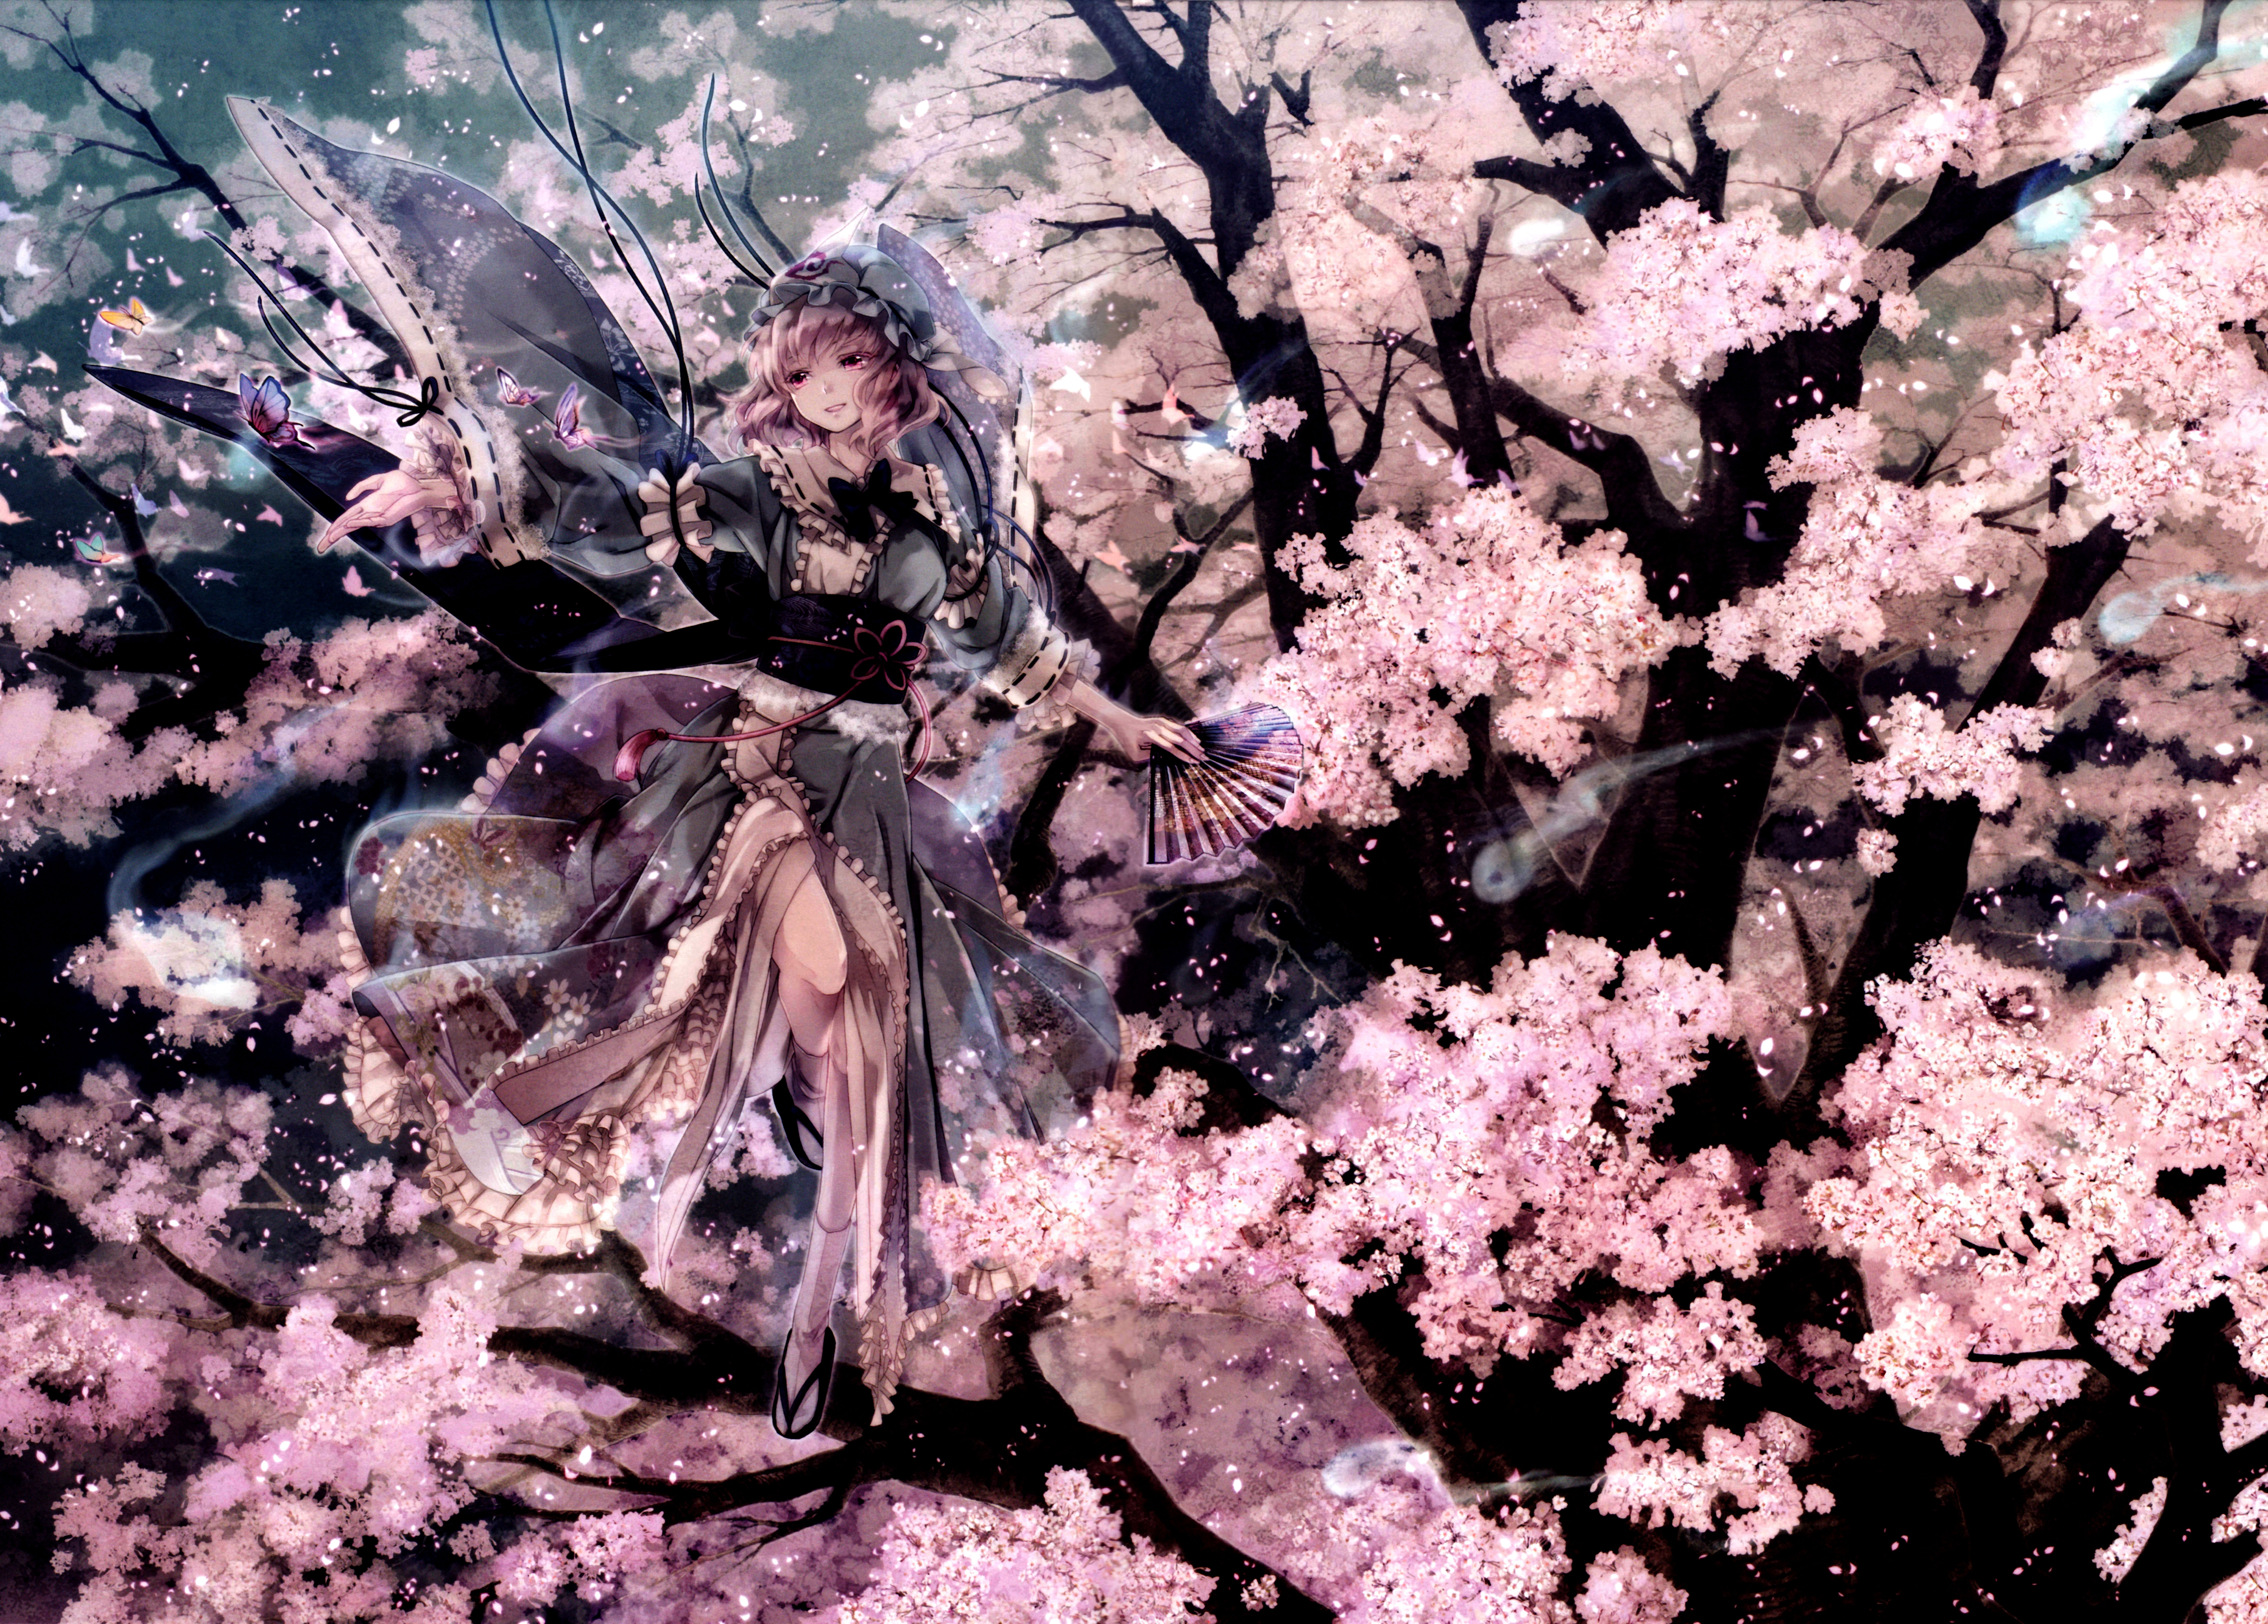 Anime 9755x6986 anime girls Touhou Saigyouji Yuyuko cherry blossom kimono anime plants fantasy art fantasy girl fans scan